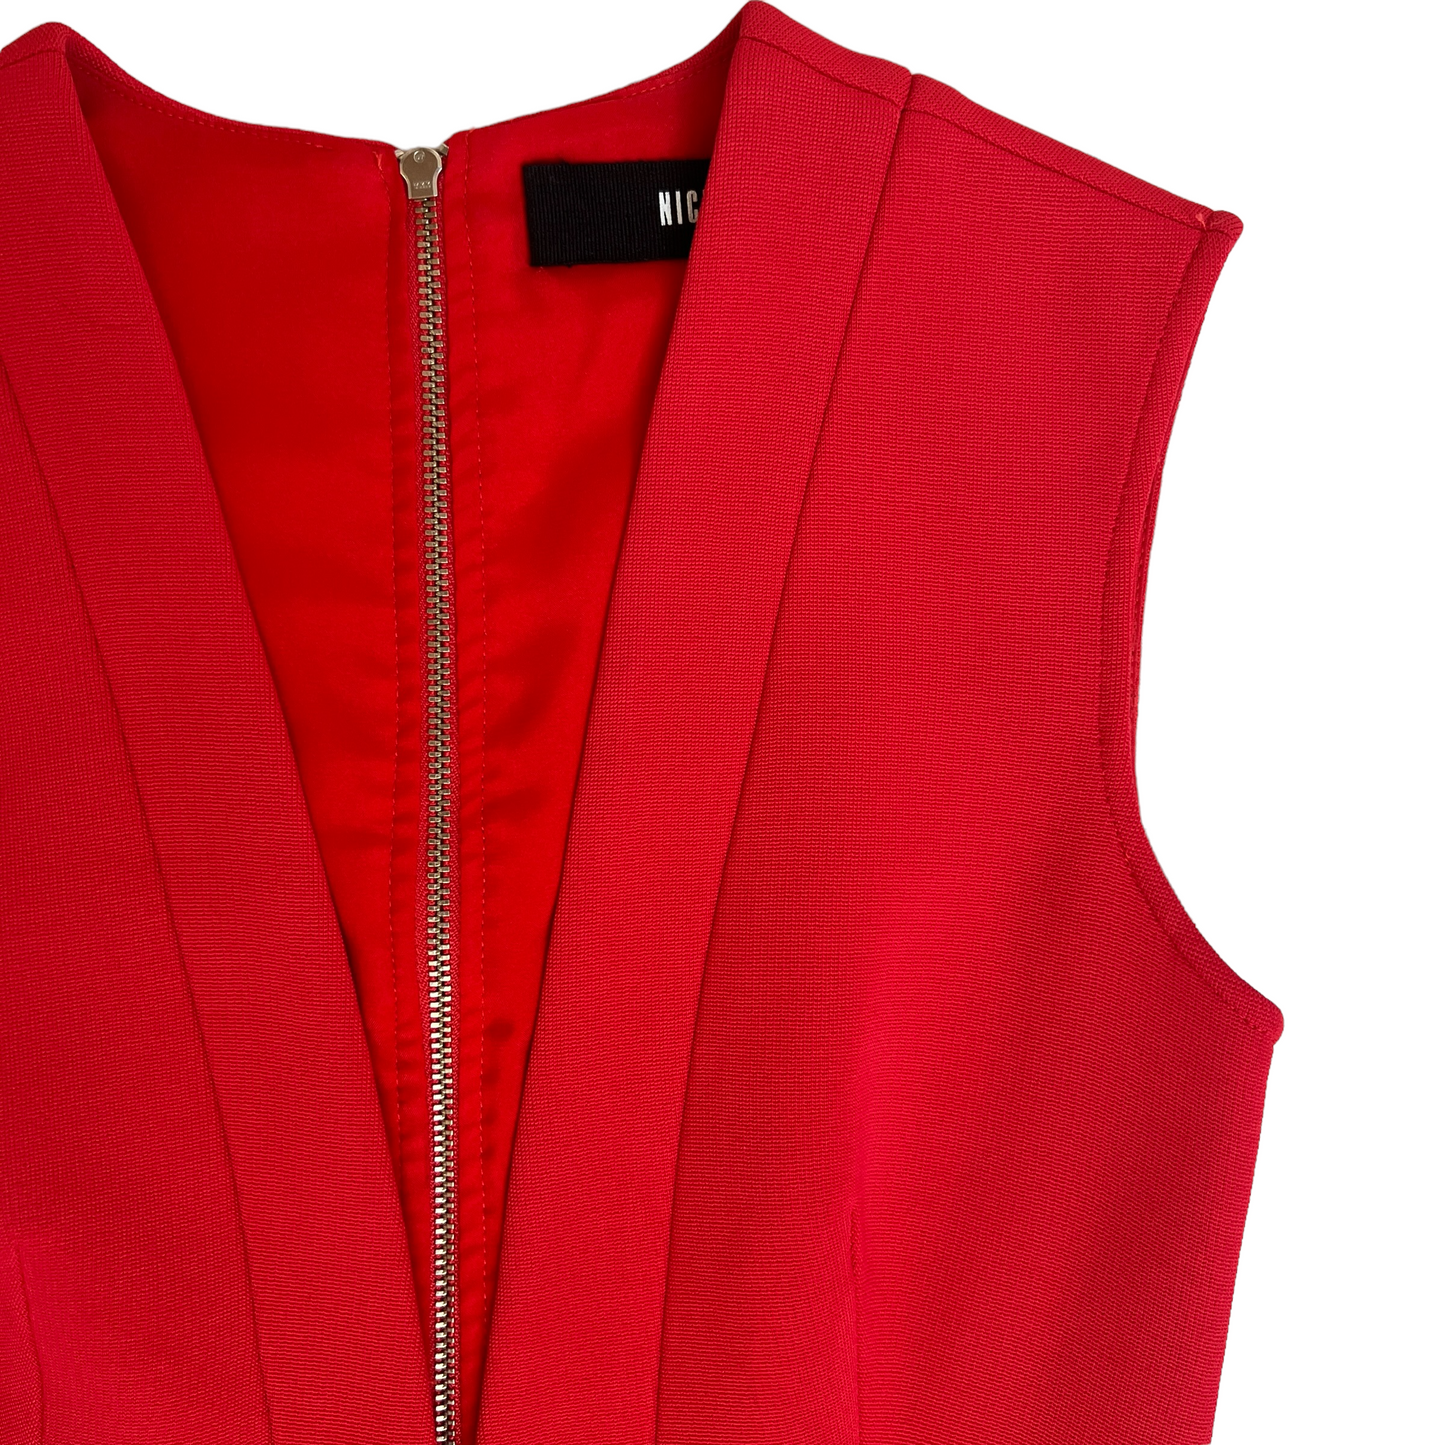 Red Sleeveless Dress - 2